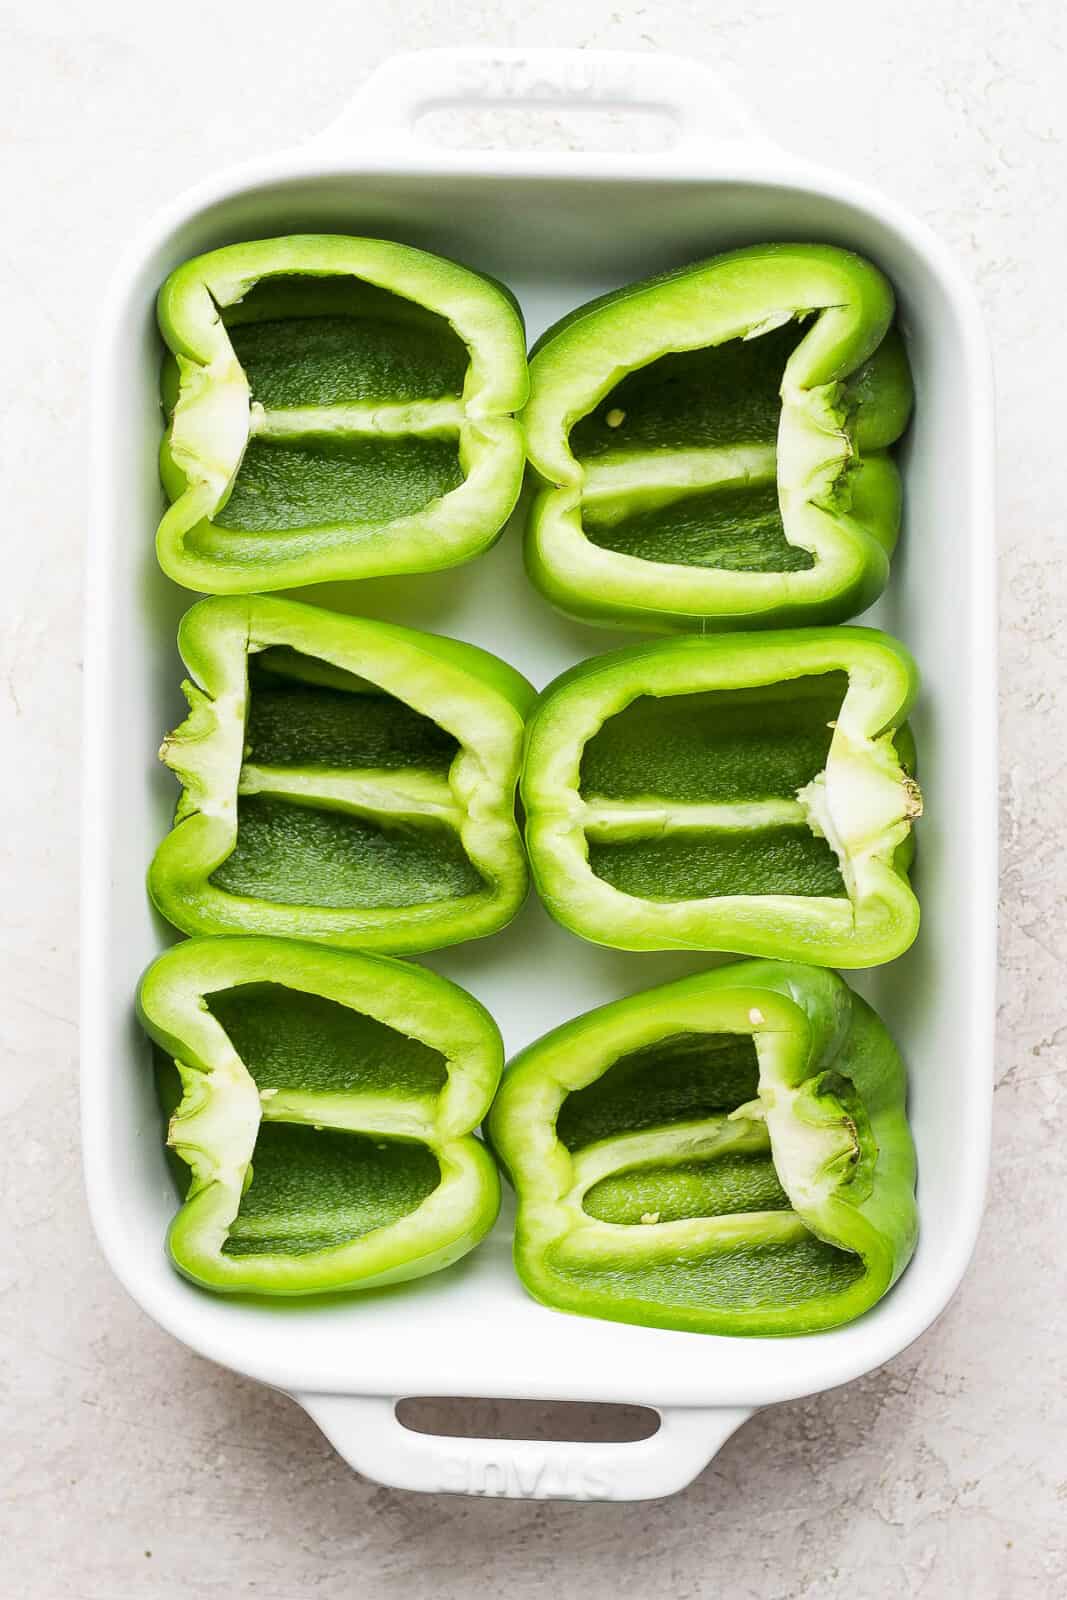 Green bell pepper halves in a baking dish.